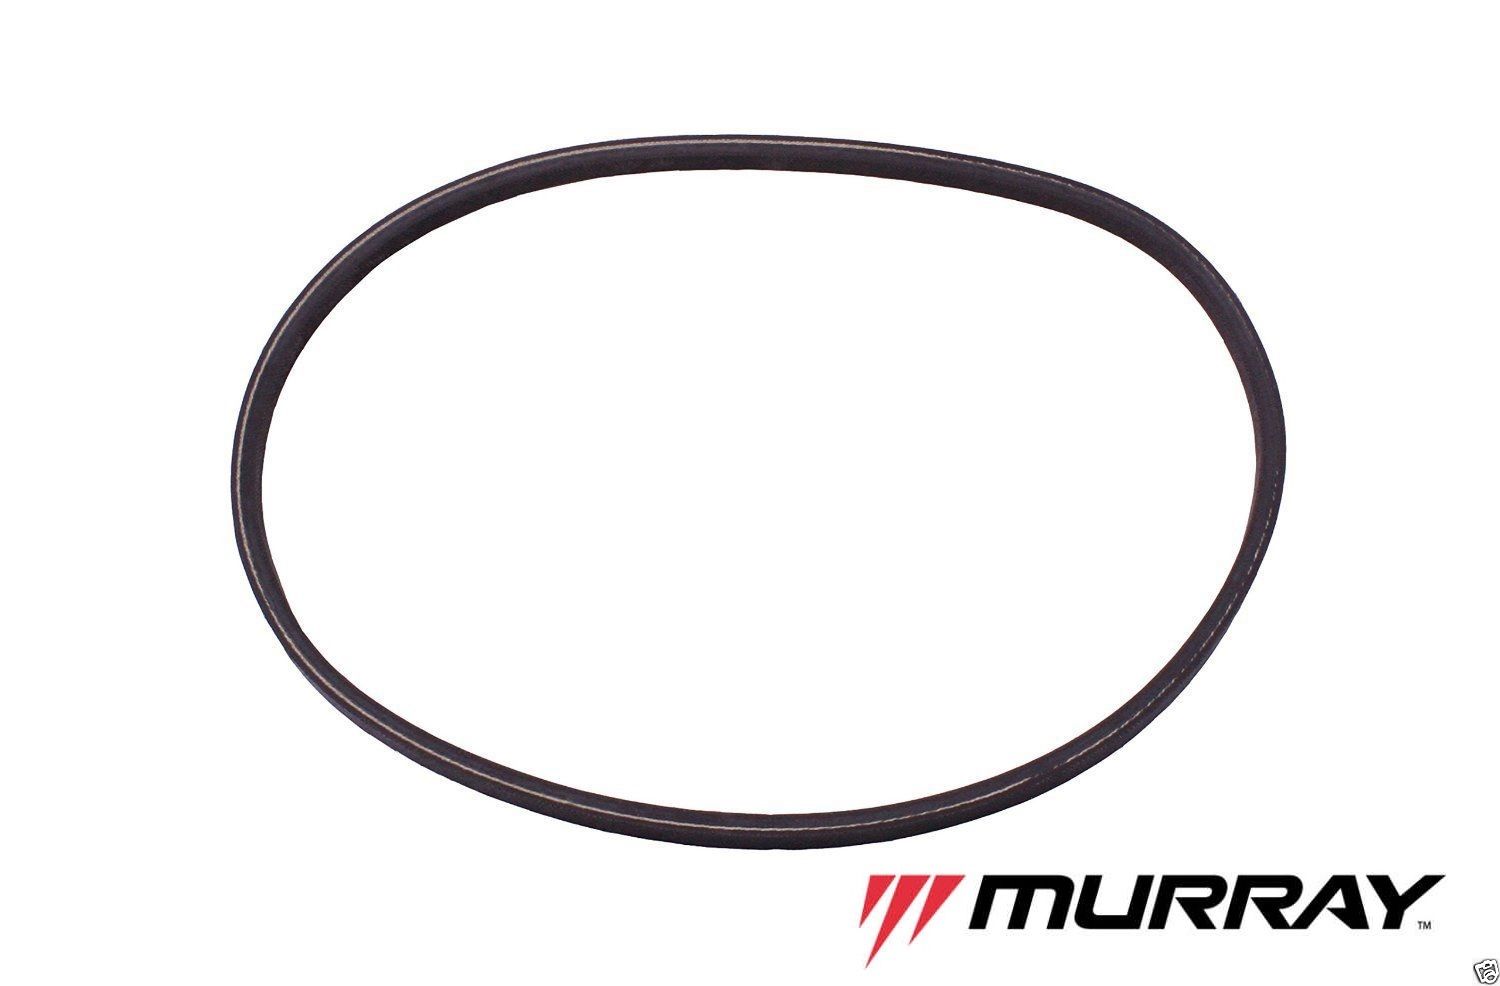 Genuine Murray 585416MA Auger Drive Belt Fits 585416 Craftsman OEM